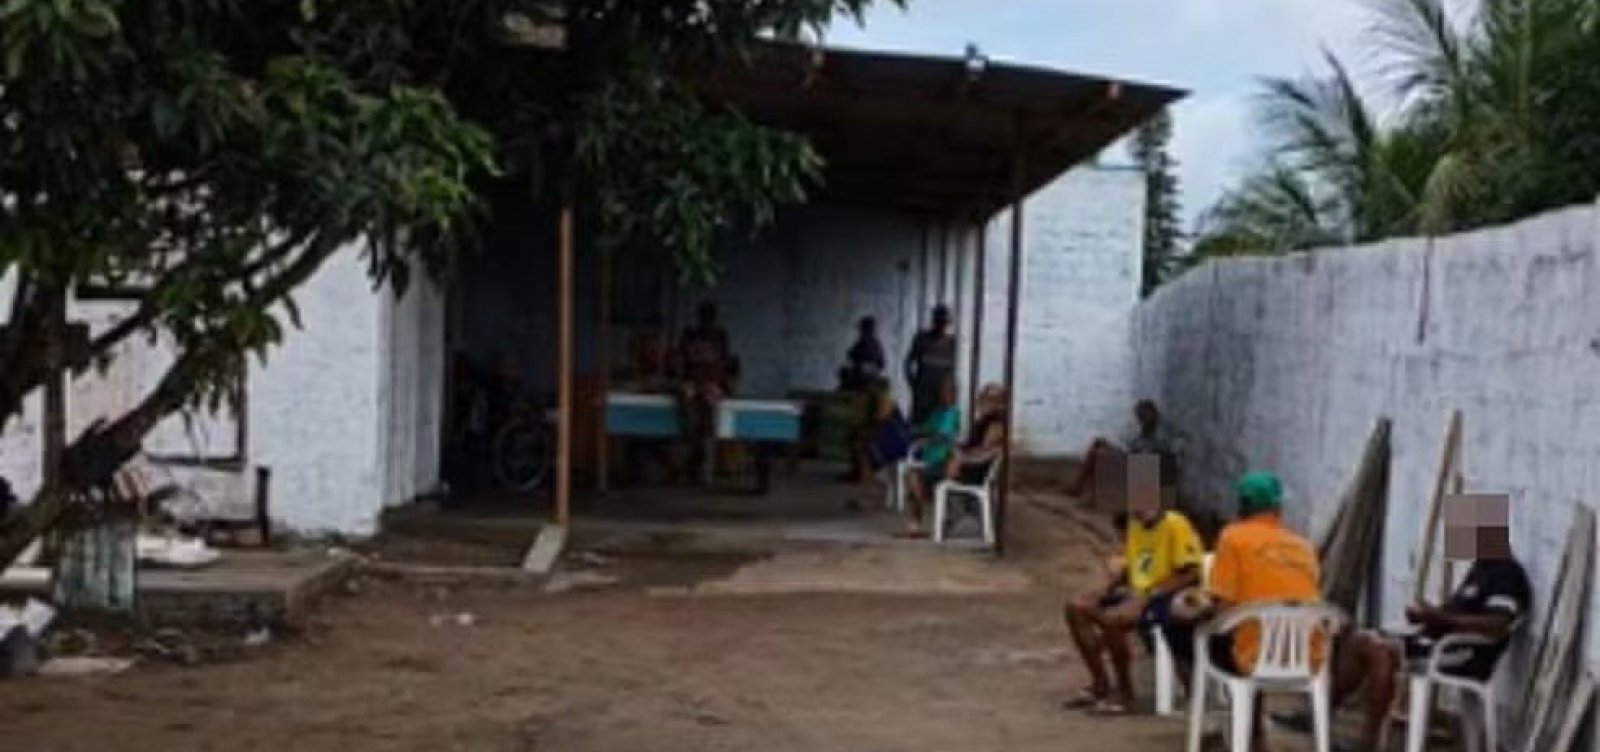 Paciente de centro terapêutico fechado após denúncia morre na Bahia